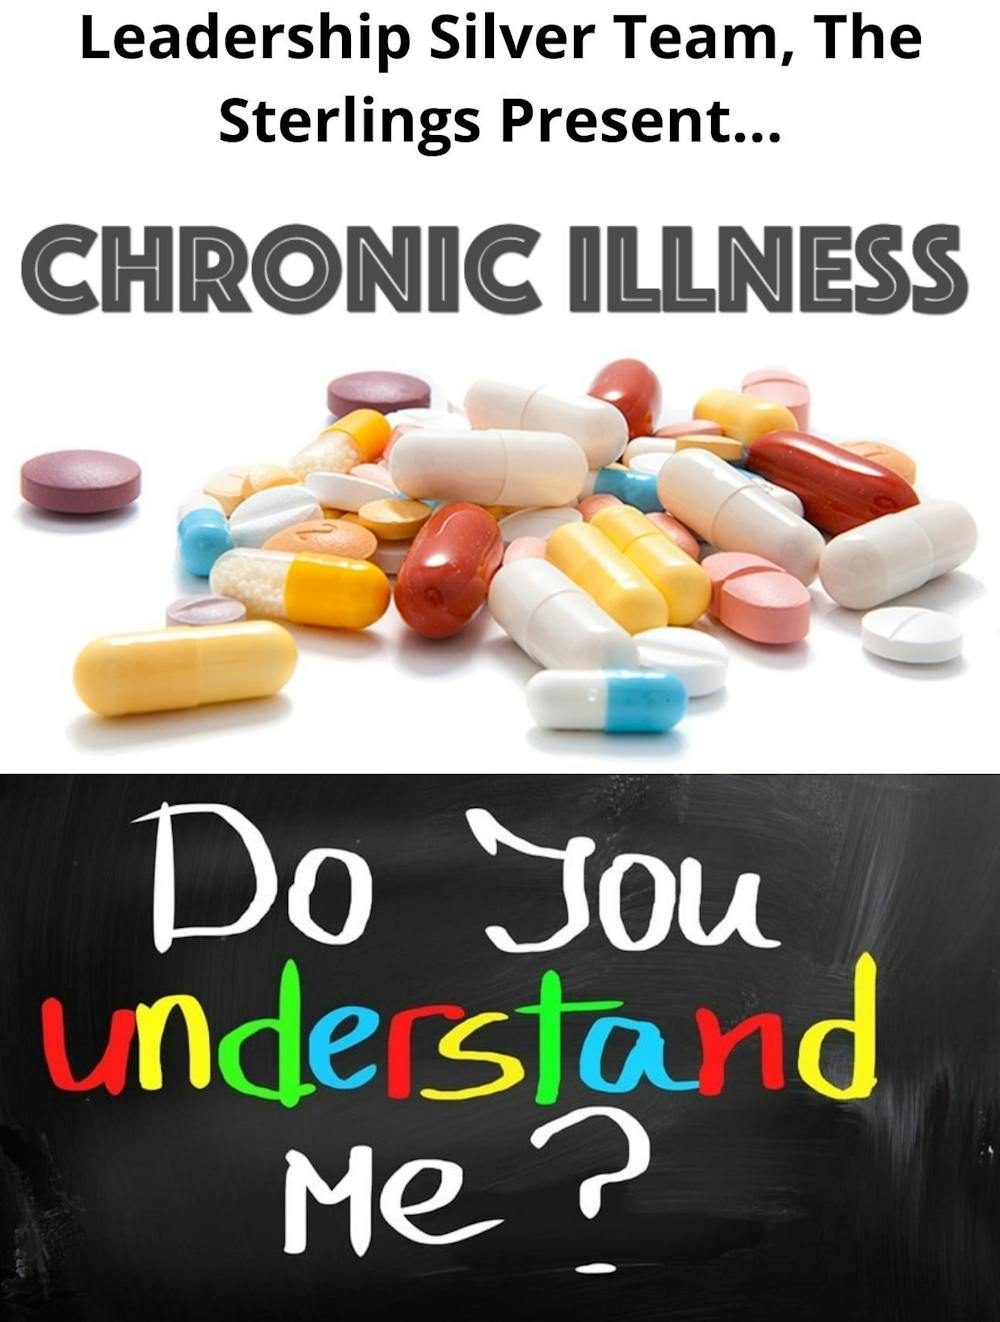 Understanding Chronic Illness